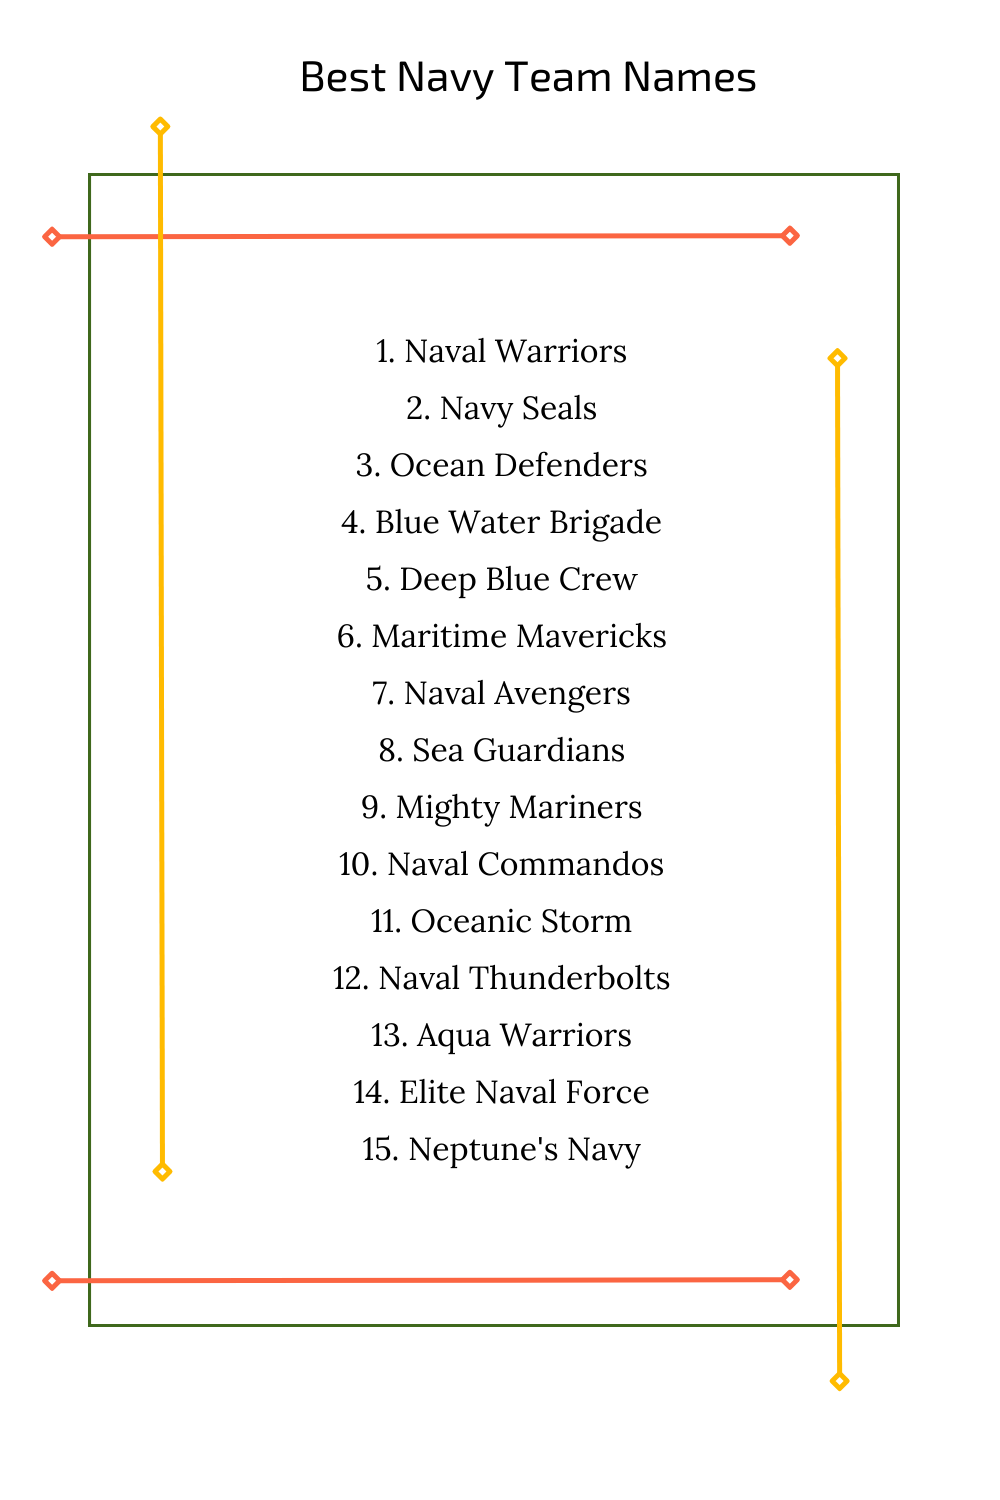 Best Navy Team Names